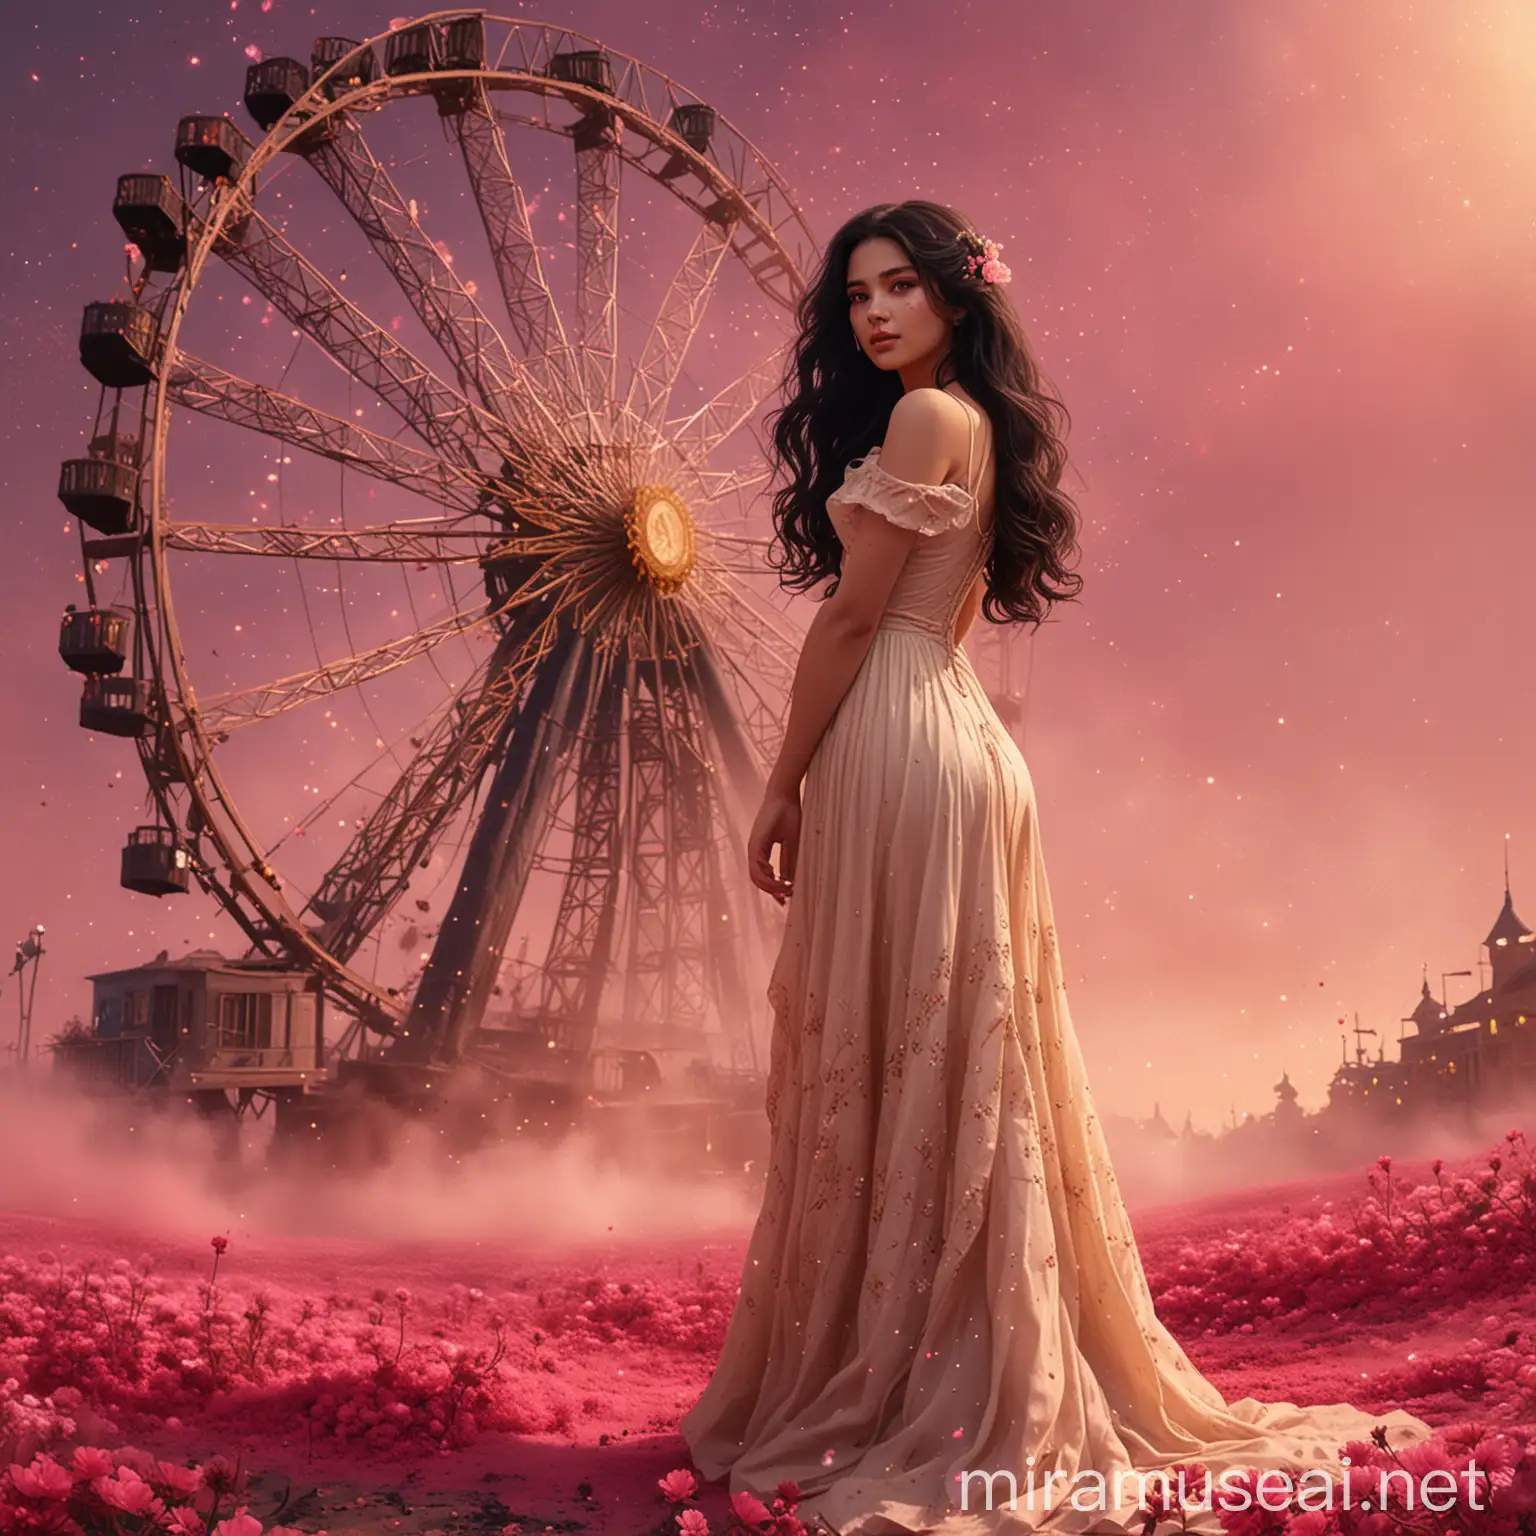 Elegant Woman Amidst Enchanting Pink Dust and Golden Ferris Wheel